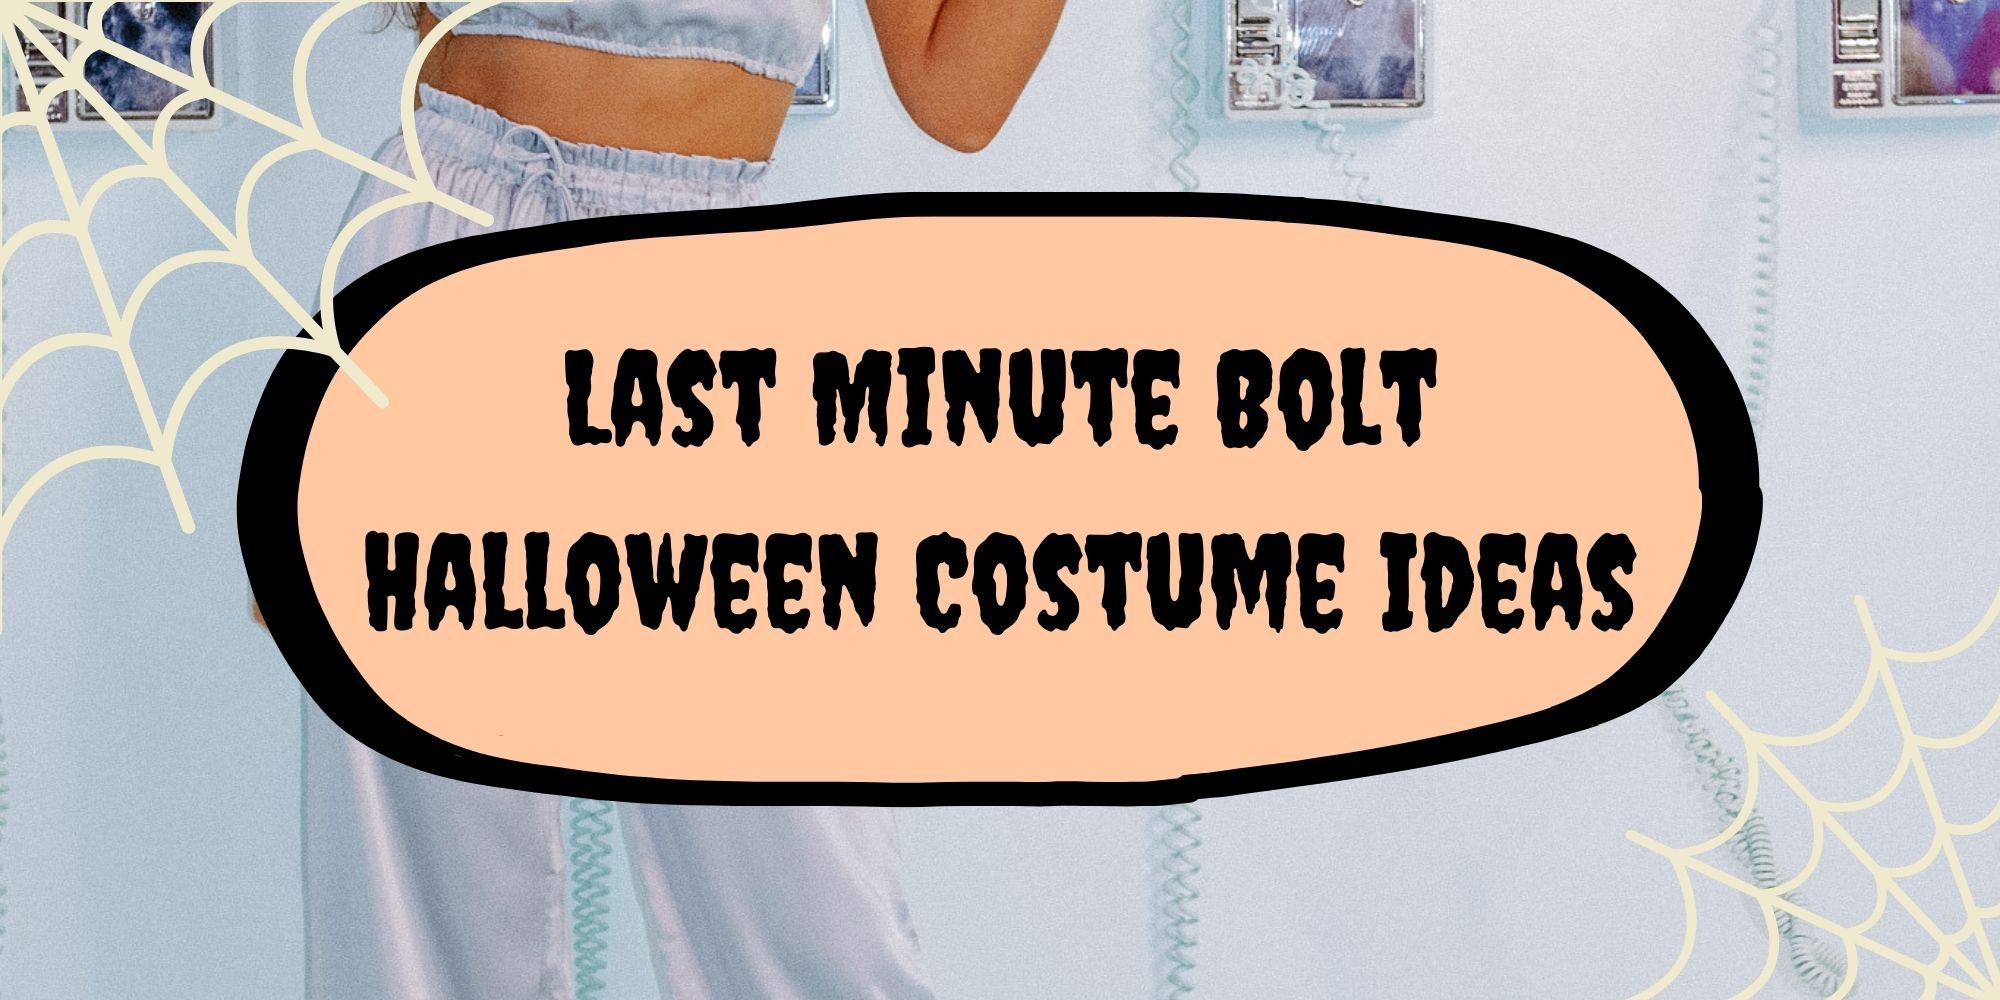 Last Minute Bolt Halloween Costumes